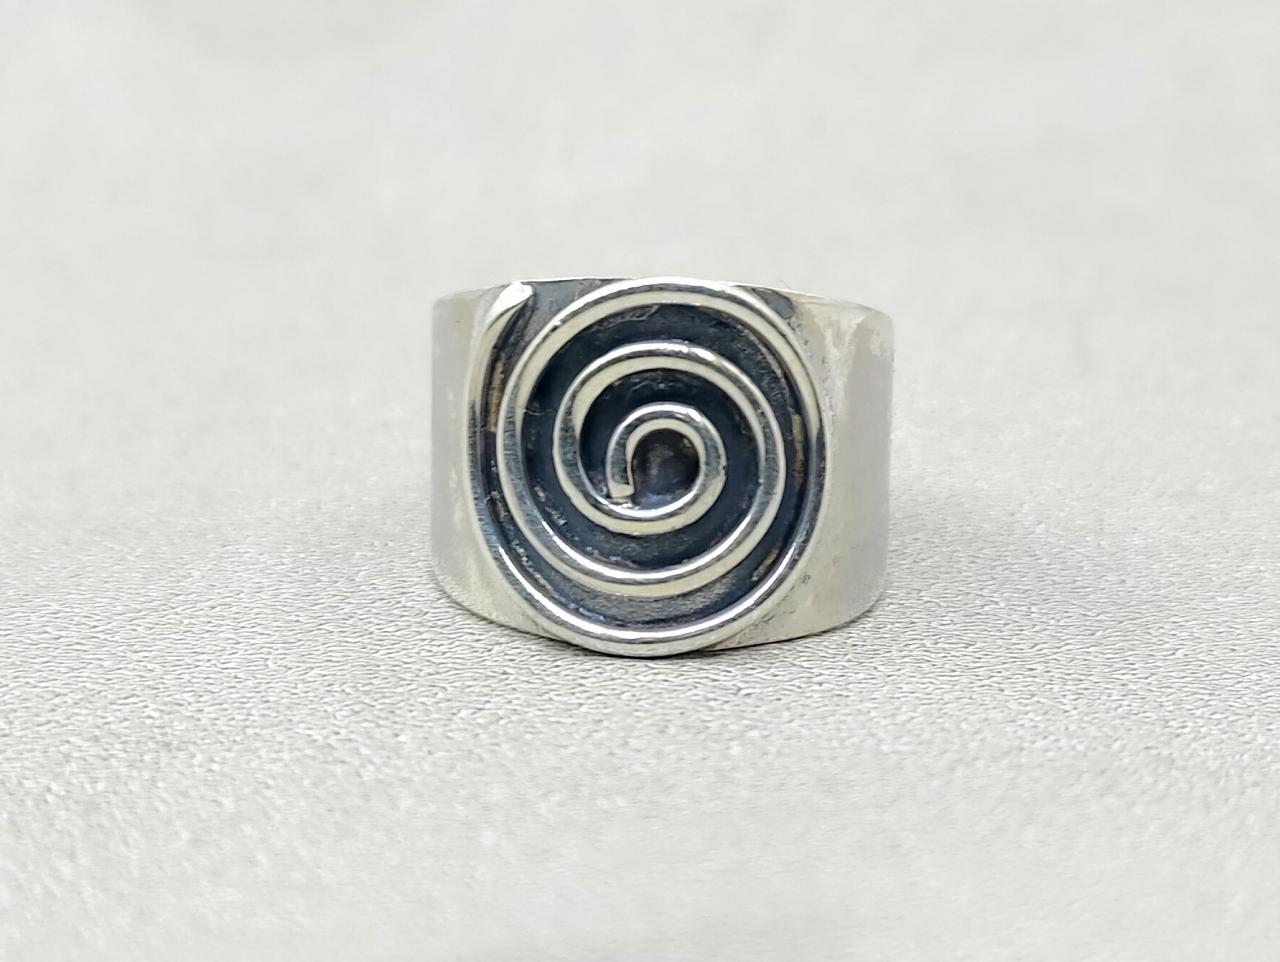 Spiral Ring, Band Ring, 925 Silver Ring, Handmade Ring, Bohemian Ring, 20mm Wide Ring, Meditation Ring, Anxiety Ring, Swirl Ring, Fine Ring